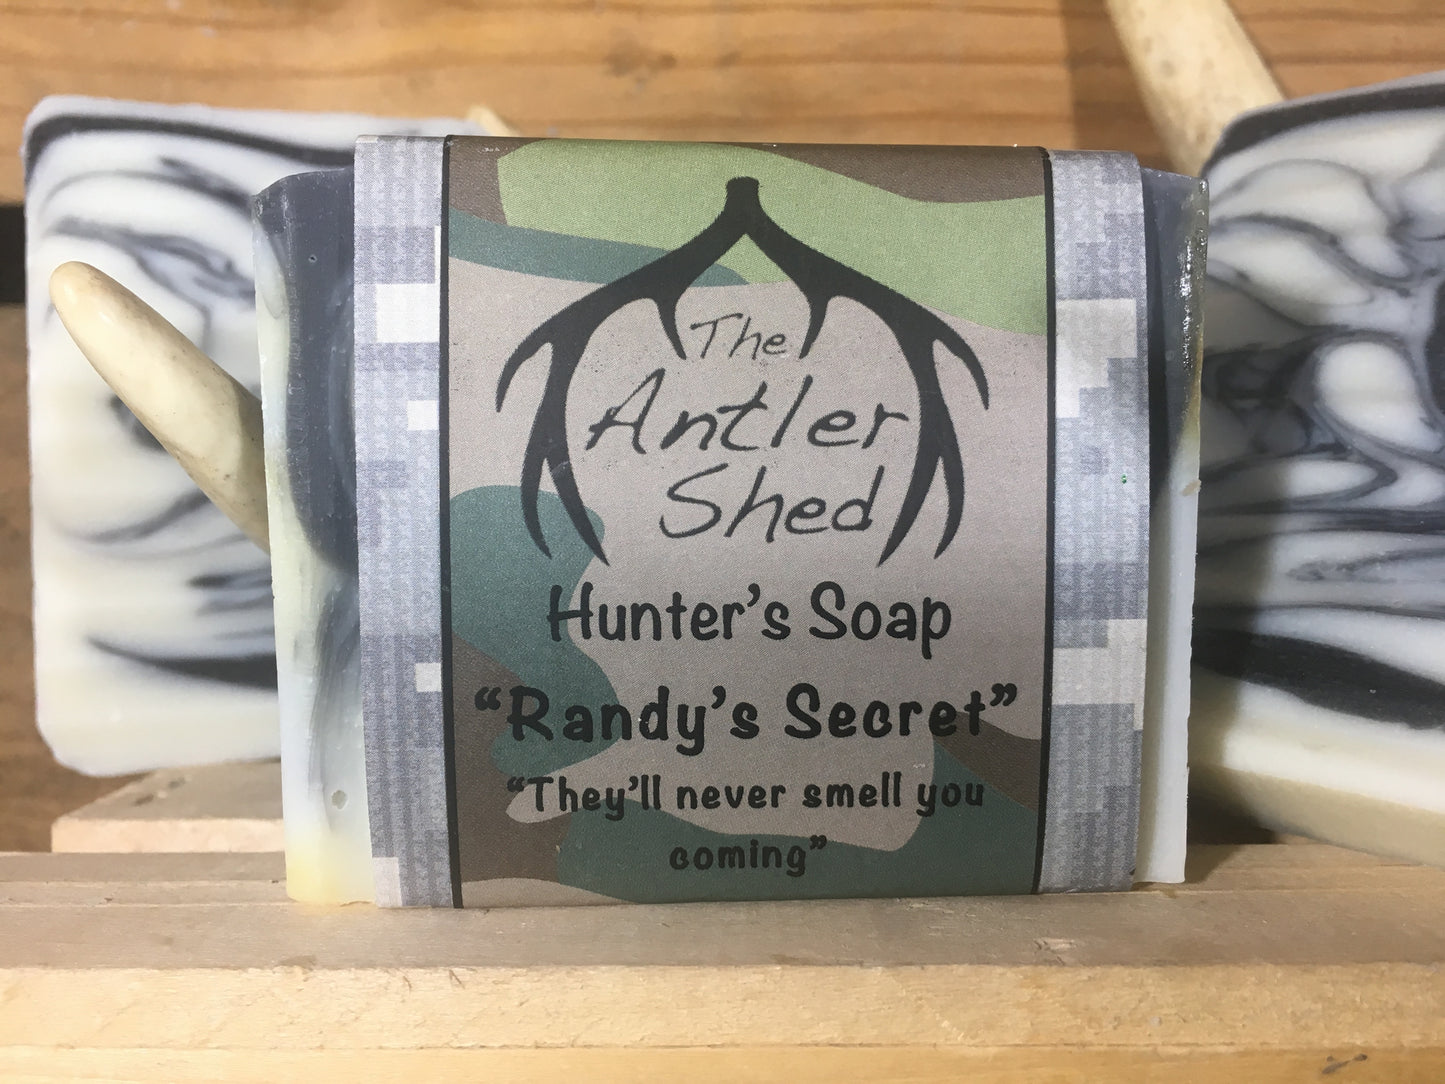 Randy's Secret! Hunting Soap